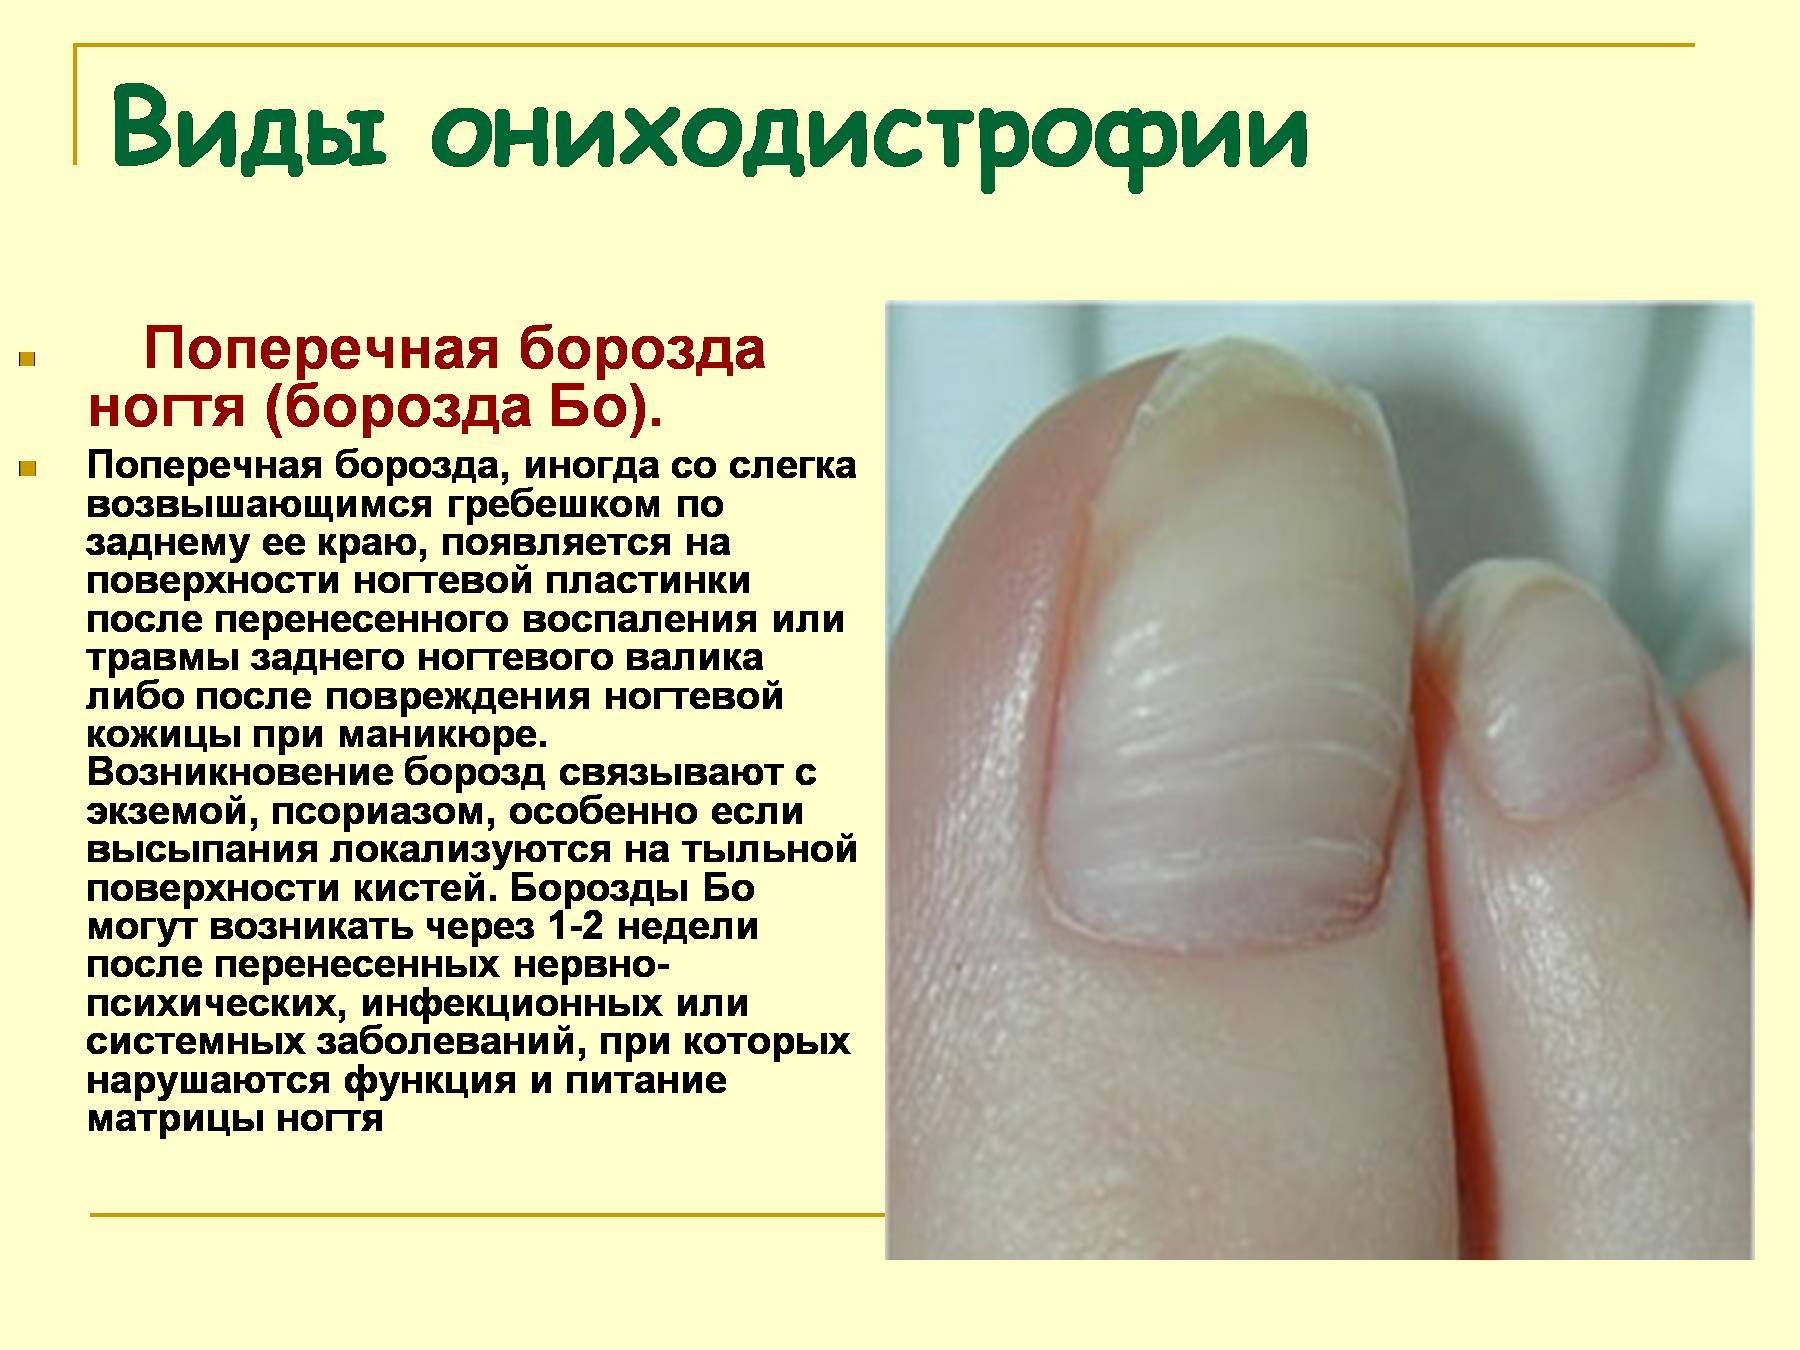 Причины борозд на ногтях